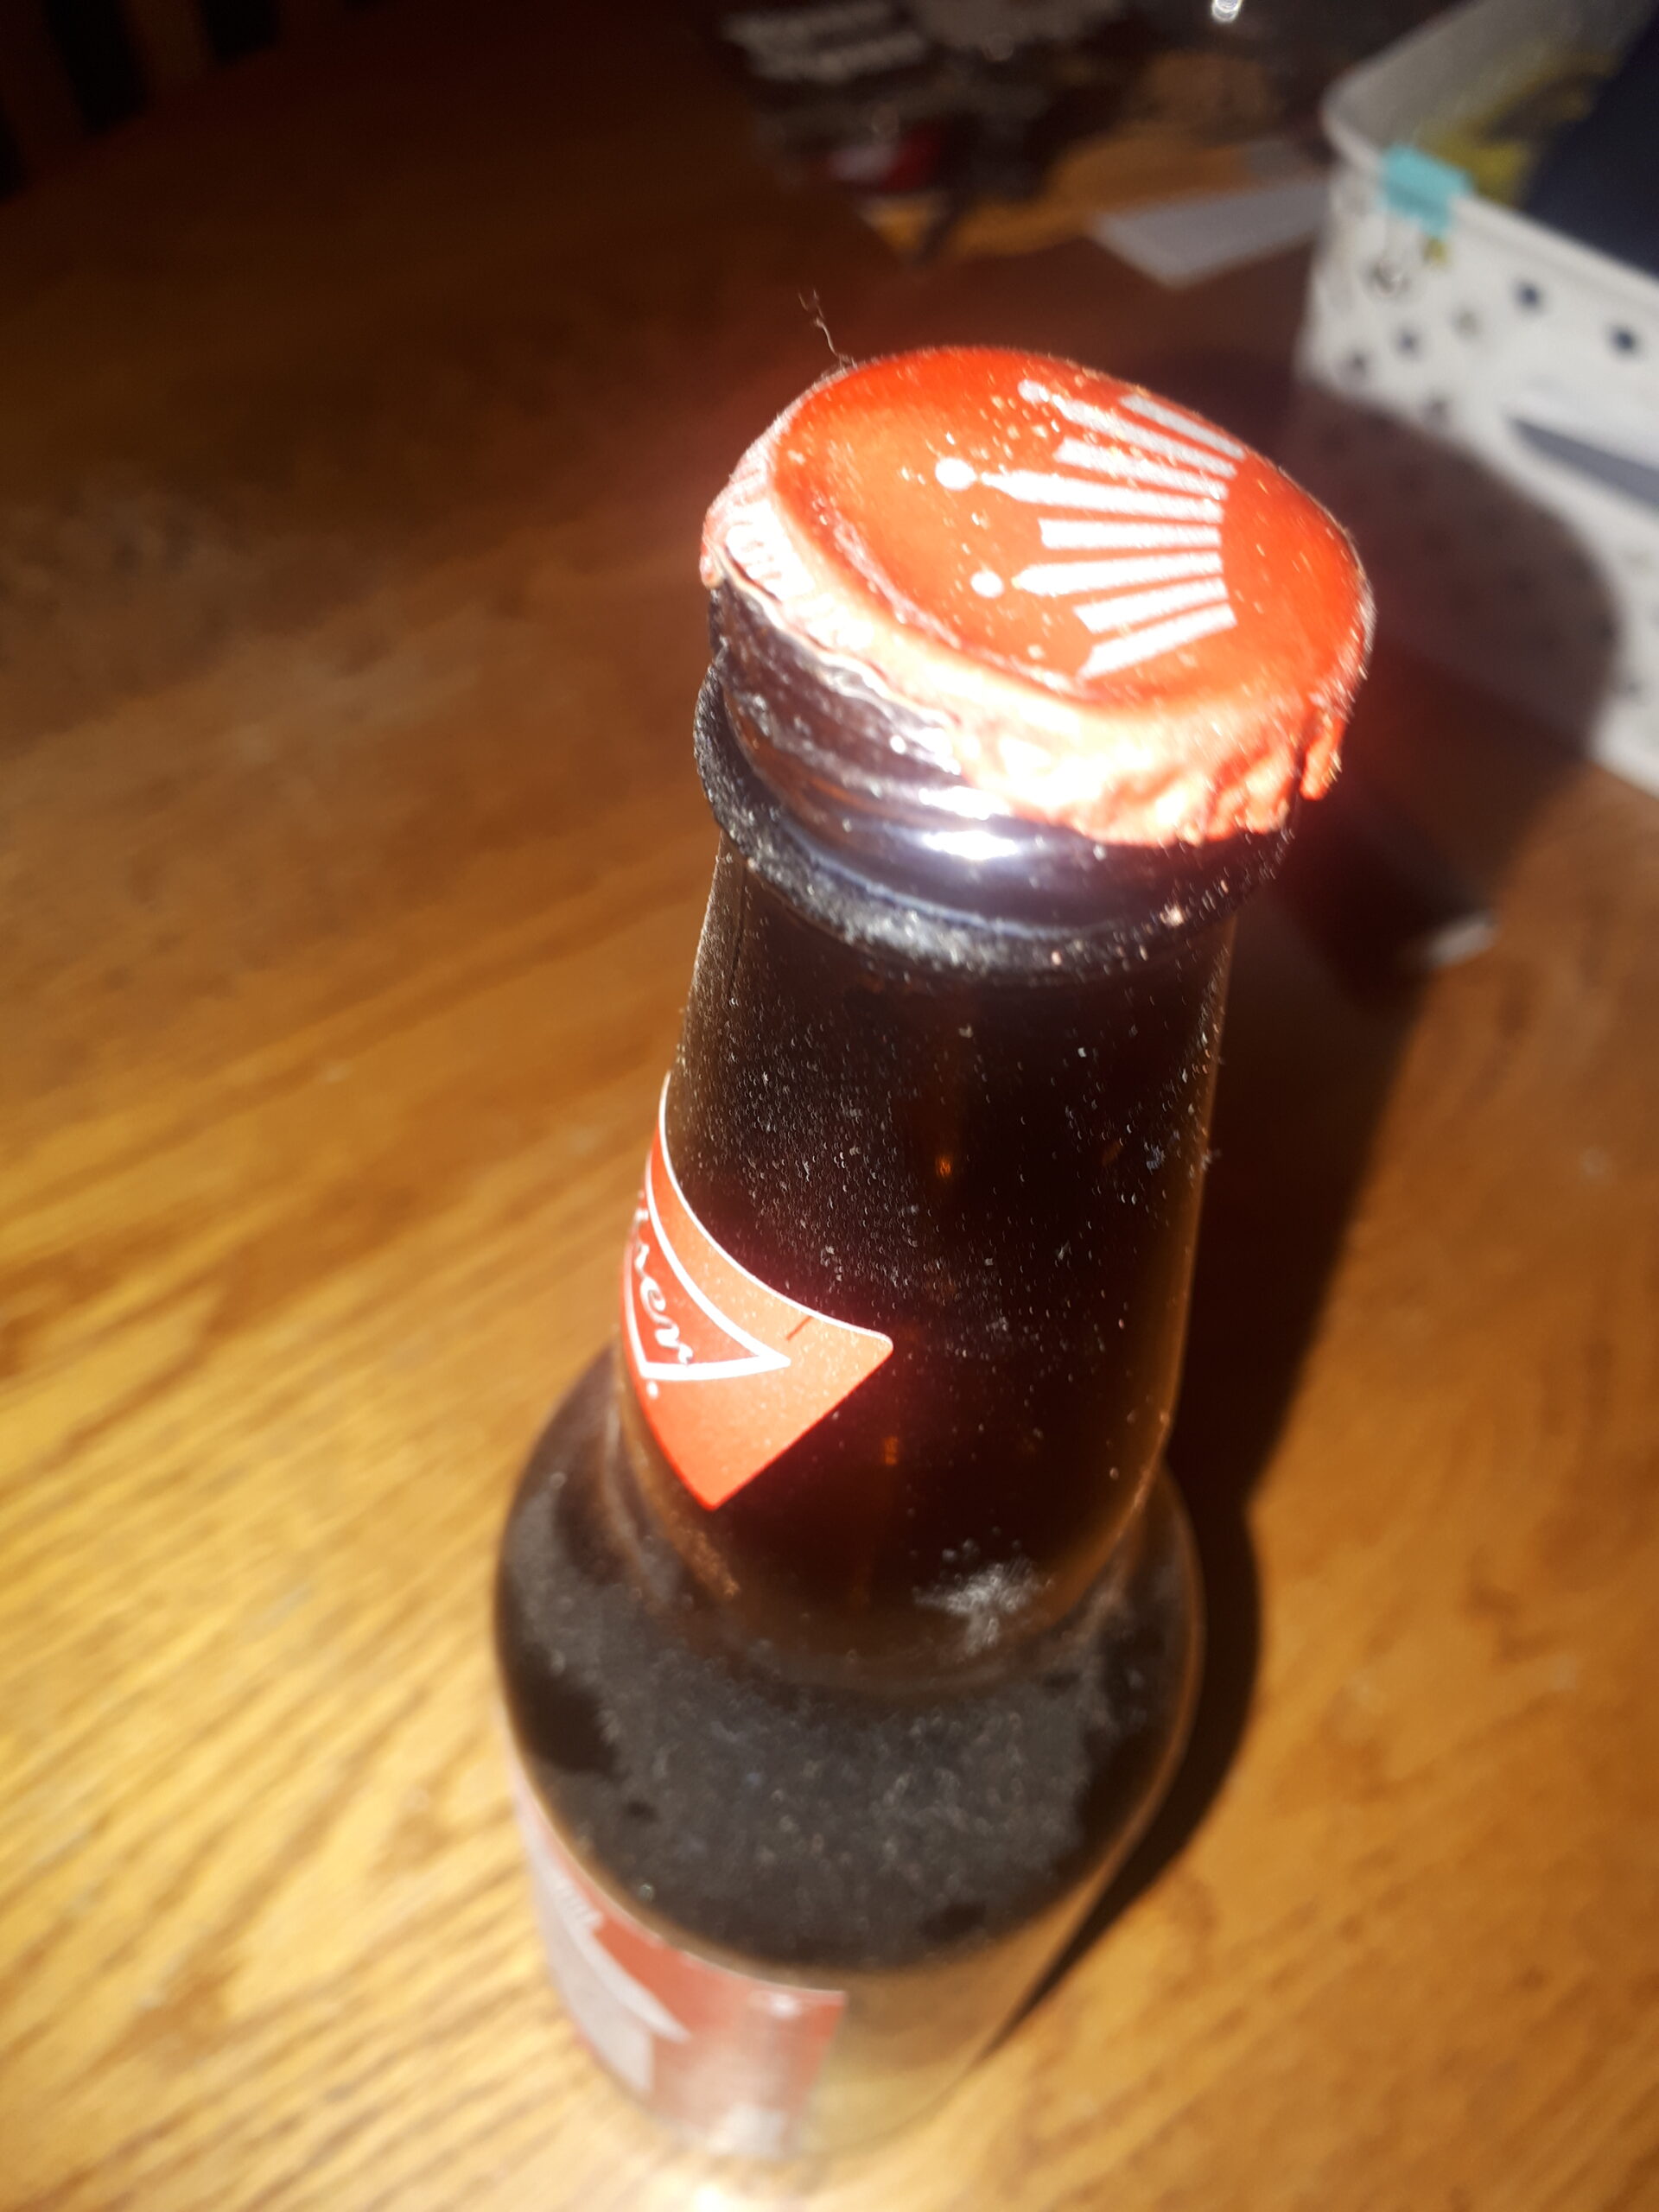 Budweiser complaint miss stamped cap on bottle